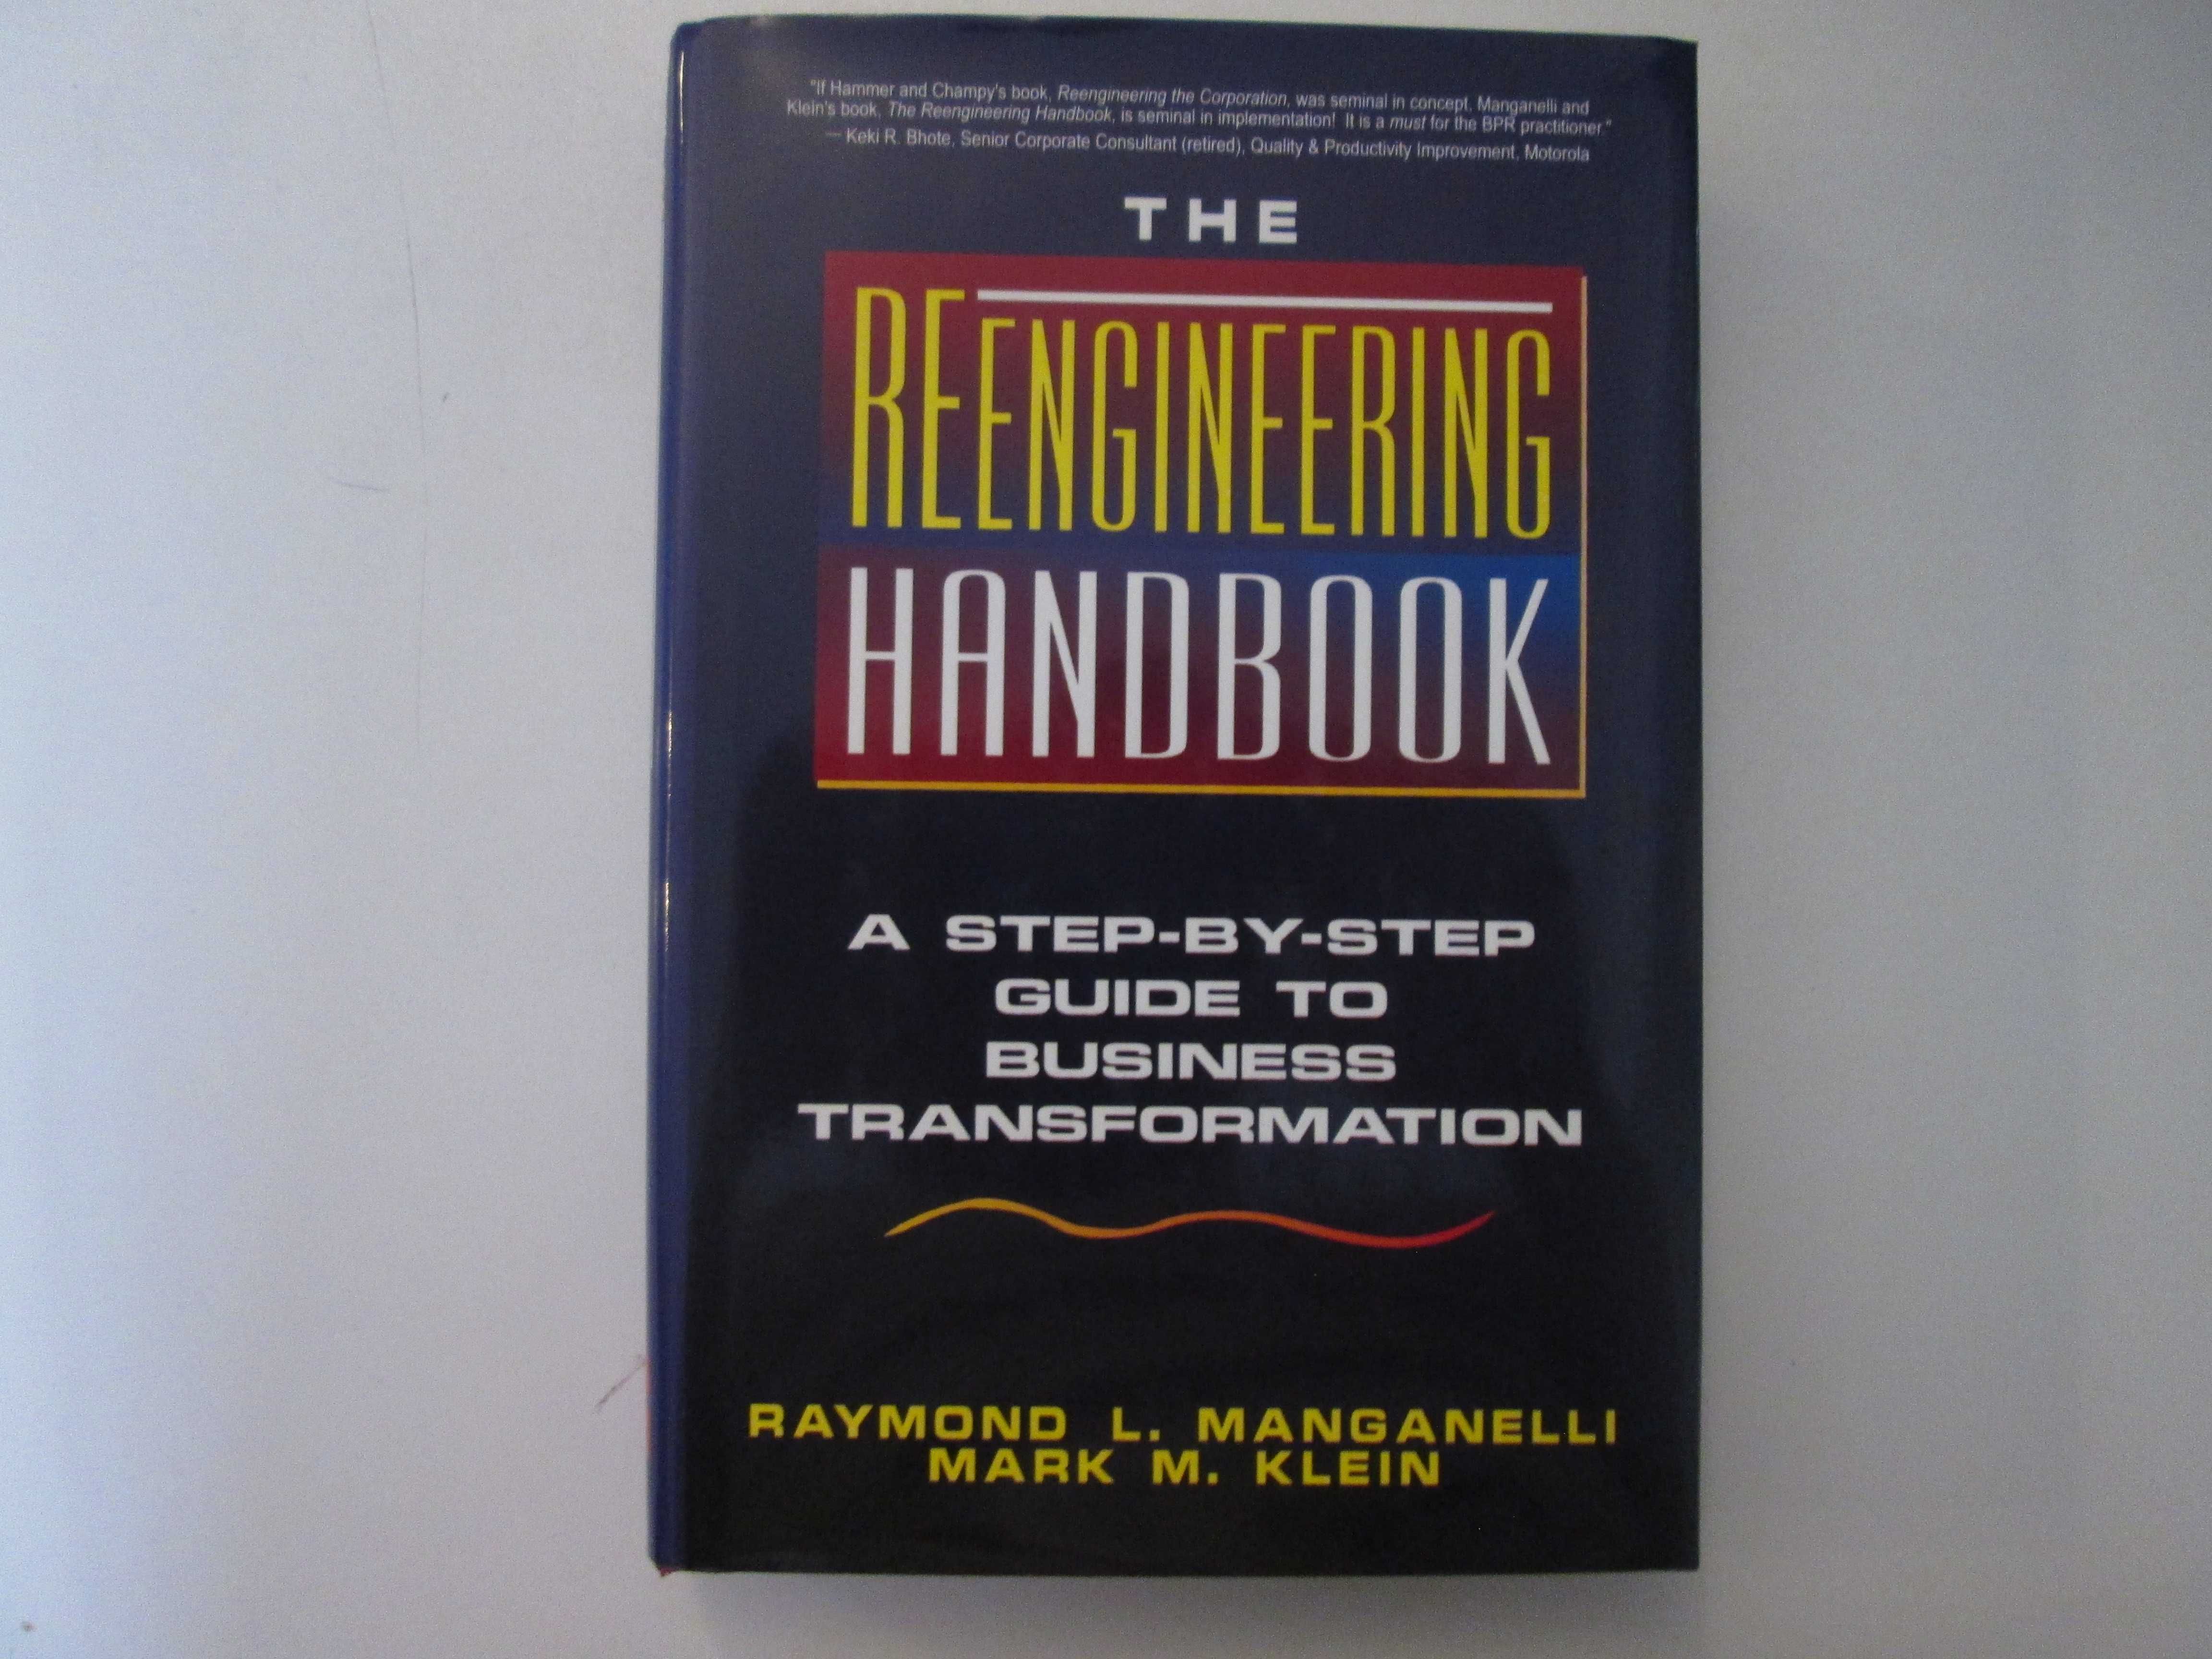 The reengineering handbook- Raymond L. Manganelli, Mark M. Klein